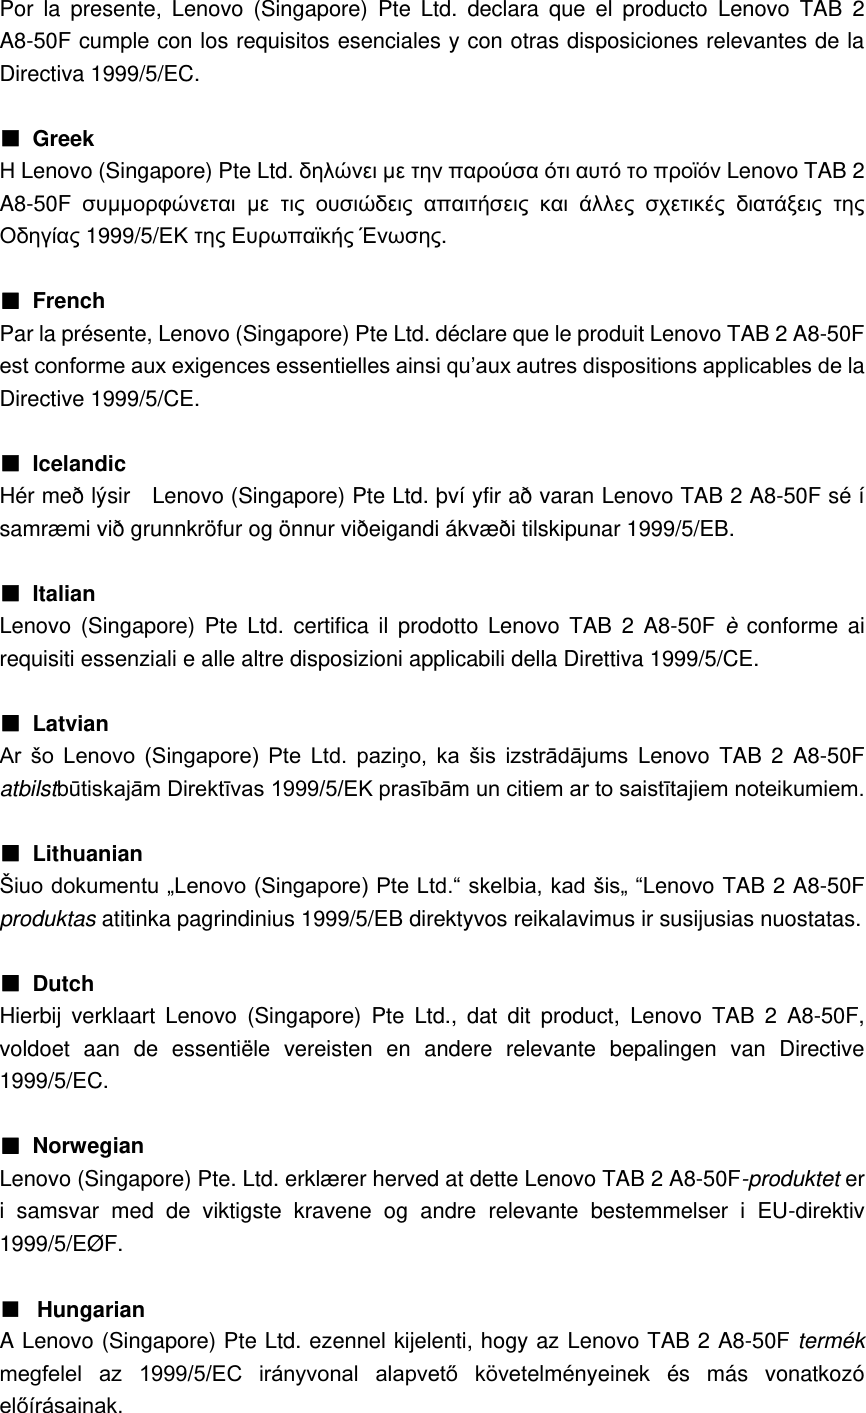 Por  la  presente,  Lenovo  (Singapore)  Pte  Ltd.  declara  que  el  producto  Lenovo  TAB  2 A8-50F cumple con los requisitos esenciales y con otras disposiciones relevantes de la Directiva 1999/5/EC.  ■ Greek Η Lenovo (Singapore) Pte Ltd. δηλώνει με την παρούσα ότι αυτό το προϊόν Lenovo TAB 2 A8-50F συμμορφώνεται με τις ουσιώδεις απαιτήσεις και άλλες σχετικές διατάξεις της Οδηγίας 1999/5/ΕΚ της Ευρωπαϊκής Ένωσης.  ■  French Par la présente, Lenovo (Singapore) Pte Ltd. déclare que le produit Lenovo TAB 2 A8-50F est conforme aux exigences essentielles ainsi qu’aux autres dispositions applicables de la Directive 1999/5/CE.  ■  Icelandic Hér með lýsir    Lenovo (Singapore) Pte Ltd. því yfir að varan Lenovo TAB 2 A8-50F sé í samræmi við grunnkröfur og önnur viðeigandi ákvæði tilskipunar 1999/5/EB.  ■  Italian Lenovo  (Singapore) Pte  Ltd. certifica  il  prodotto  Lenovo  TAB  2 A8-50F è  conforme  ai requisiti essenziali e alle altre disposizioni applicabili della Direttiva 1999/5/CE.  ■  Latvian Ar  šo  Lenovo  (Singapore)  Pte  Ltd.  paziņo,  ka  šis  izstrādājums  Lenovo  TAB 2  A8-50F atbilstbūtiskajām Direktīvas 1999/5/EK prasībām un citiem ar to saistītajiem noteikumiem.  ■  Lithuanian Šiuo dokumentu „Lenovo (Singapore) Pte Ltd.“ skelbia, kad šis„ “Lenovo TAB 2 A8-50F produktas atitinka pagrindinius 1999/5/EB direktyvos reikalavimus ir susijusias nuostatas.  ■  Dutch Hierbij  verklaart  Lenovo  (Singapore)  Pte  Ltd.,  dat  dit  product,  Lenovo  TAB  2  A8-50F, voldoet  aan  de  essentiële  vereisten  en  andere  relevante  bepalingen  van  Directive 1999/5/EC.  ■  Norwegian Lenovo (Singapore) Pte. Ltd. erklærer herved at dette Lenovo TAB 2 A8-50F-produktet er i  samsvar  med  de  viktigste  kravene  og  andre  relevante  bestemmelser  i  EU-direktiv 1999/5/EØF.  ■ Hungarian A Lenovo (Singapore) Pte Ltd. ezennel kijelenti, hogy az Lenovo TAB 2 A8-50F termék megfelel  az  1999/5/EC  irányvonal  alapvető  követelményeinek  és  más  vonatkozó előírásainak. 